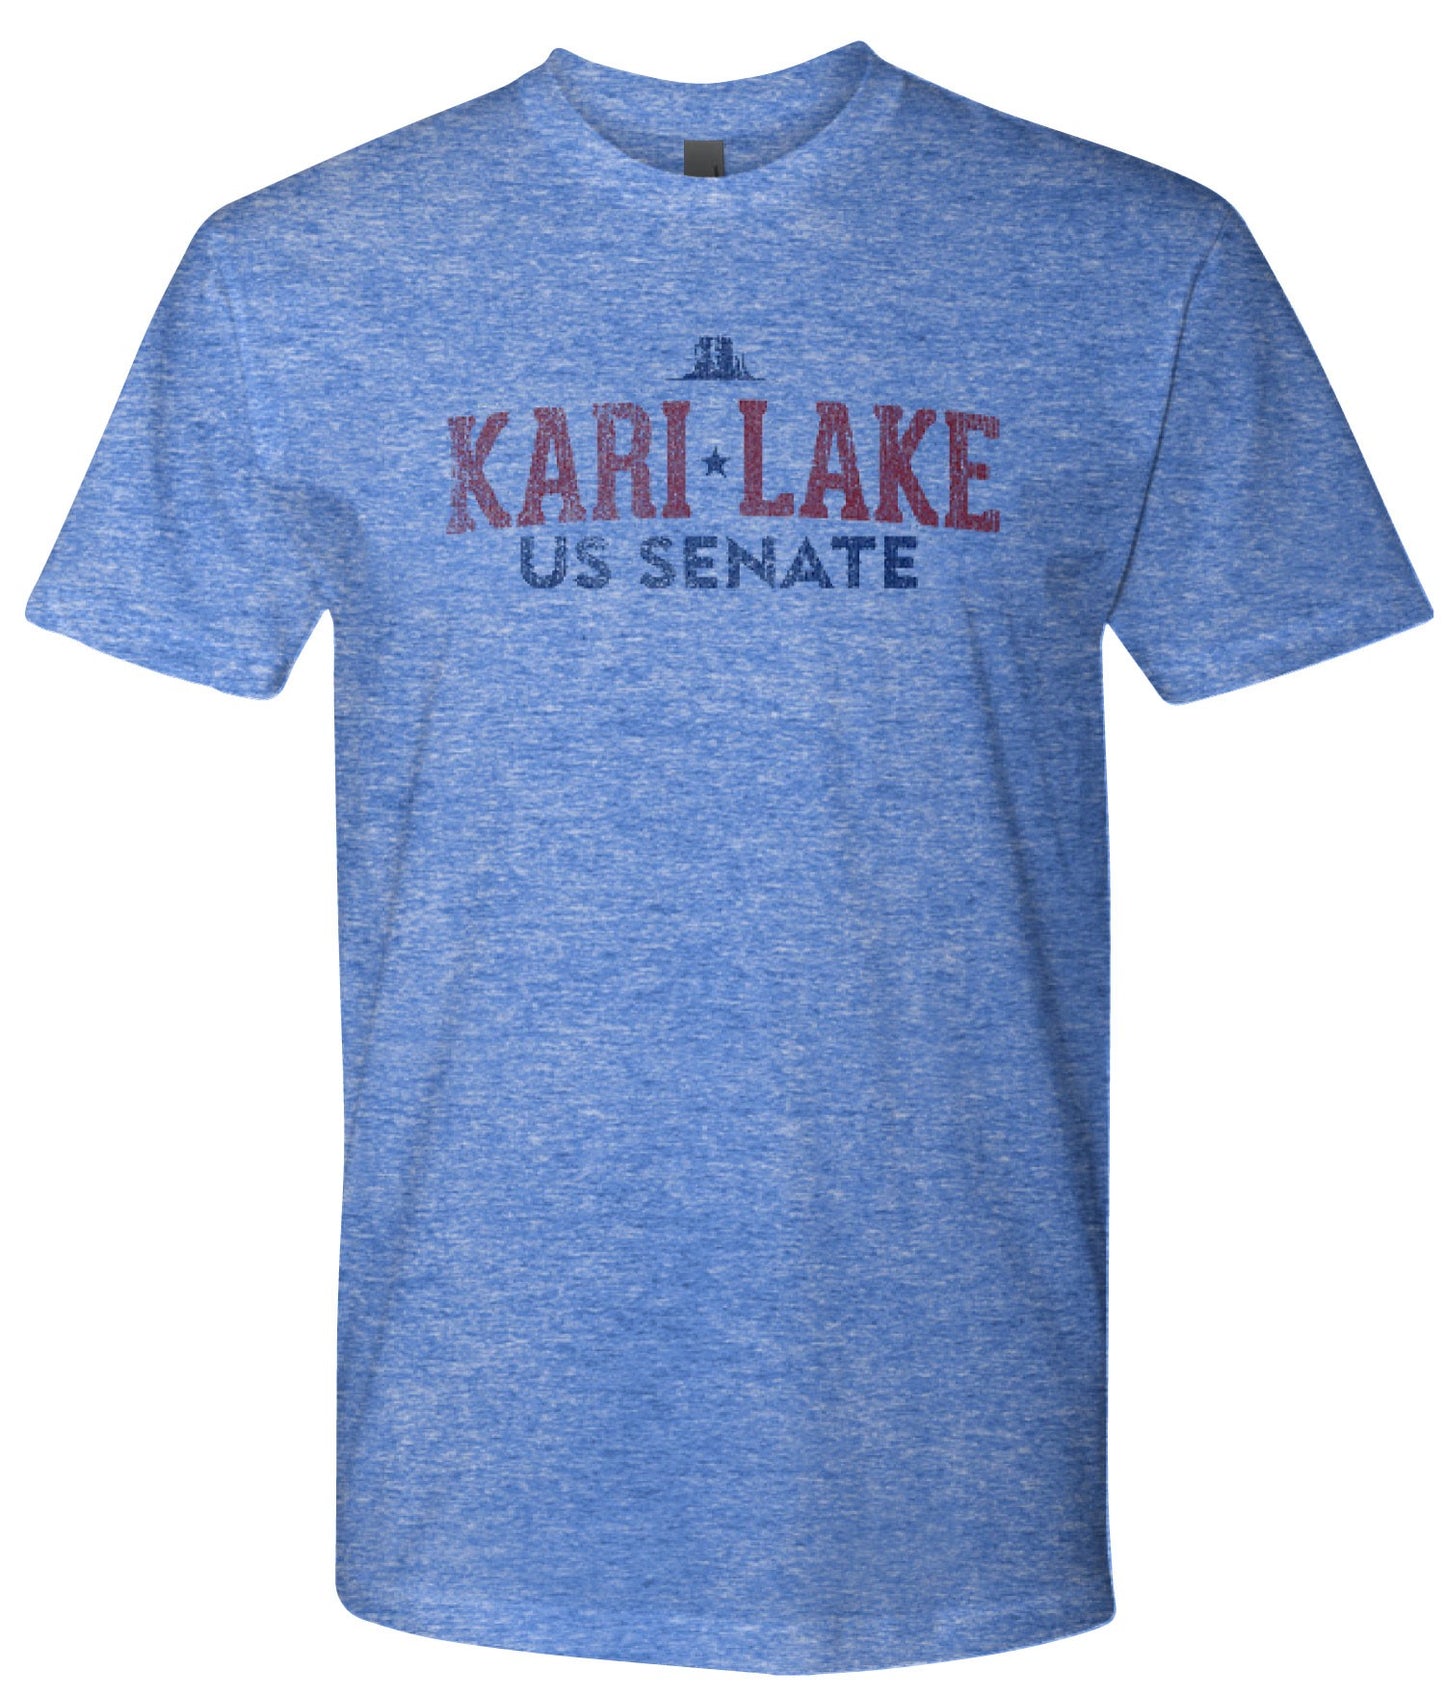 Kari Lake for US Senate: Men’s Crew (Blue, Navy)